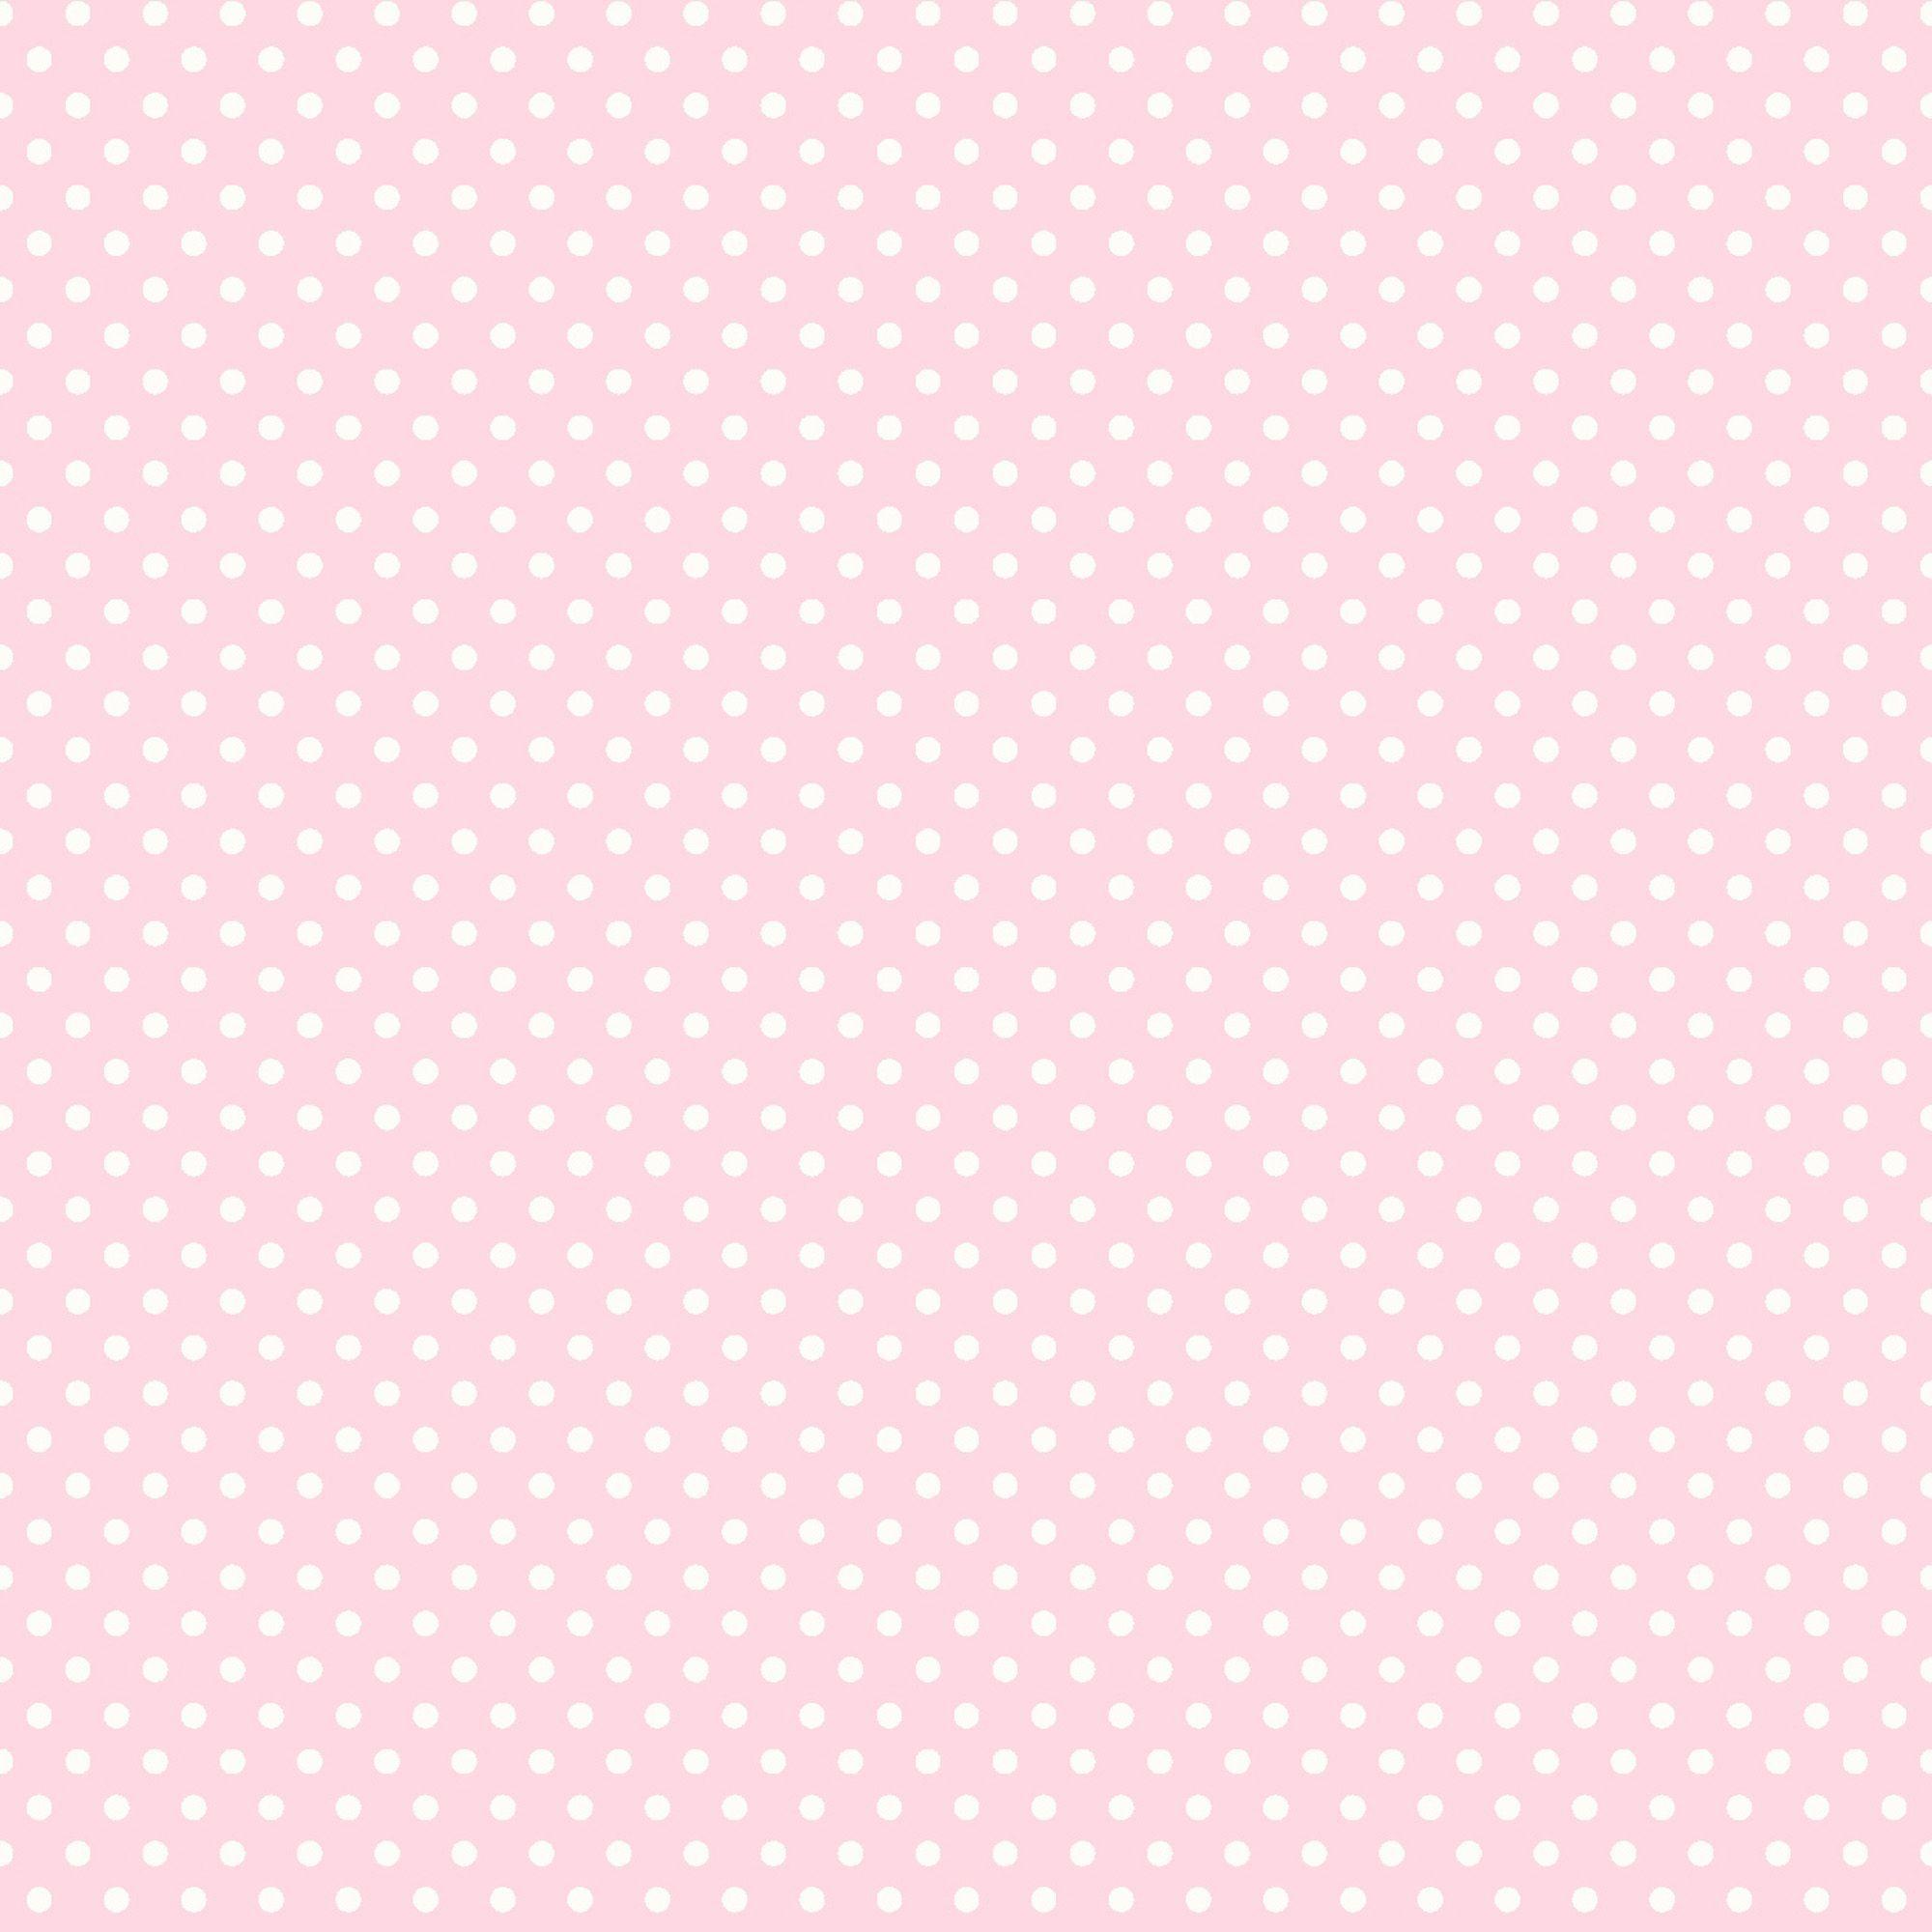 Holden Décor Pink White Polka Dots Wallpaper. Departments. DIY